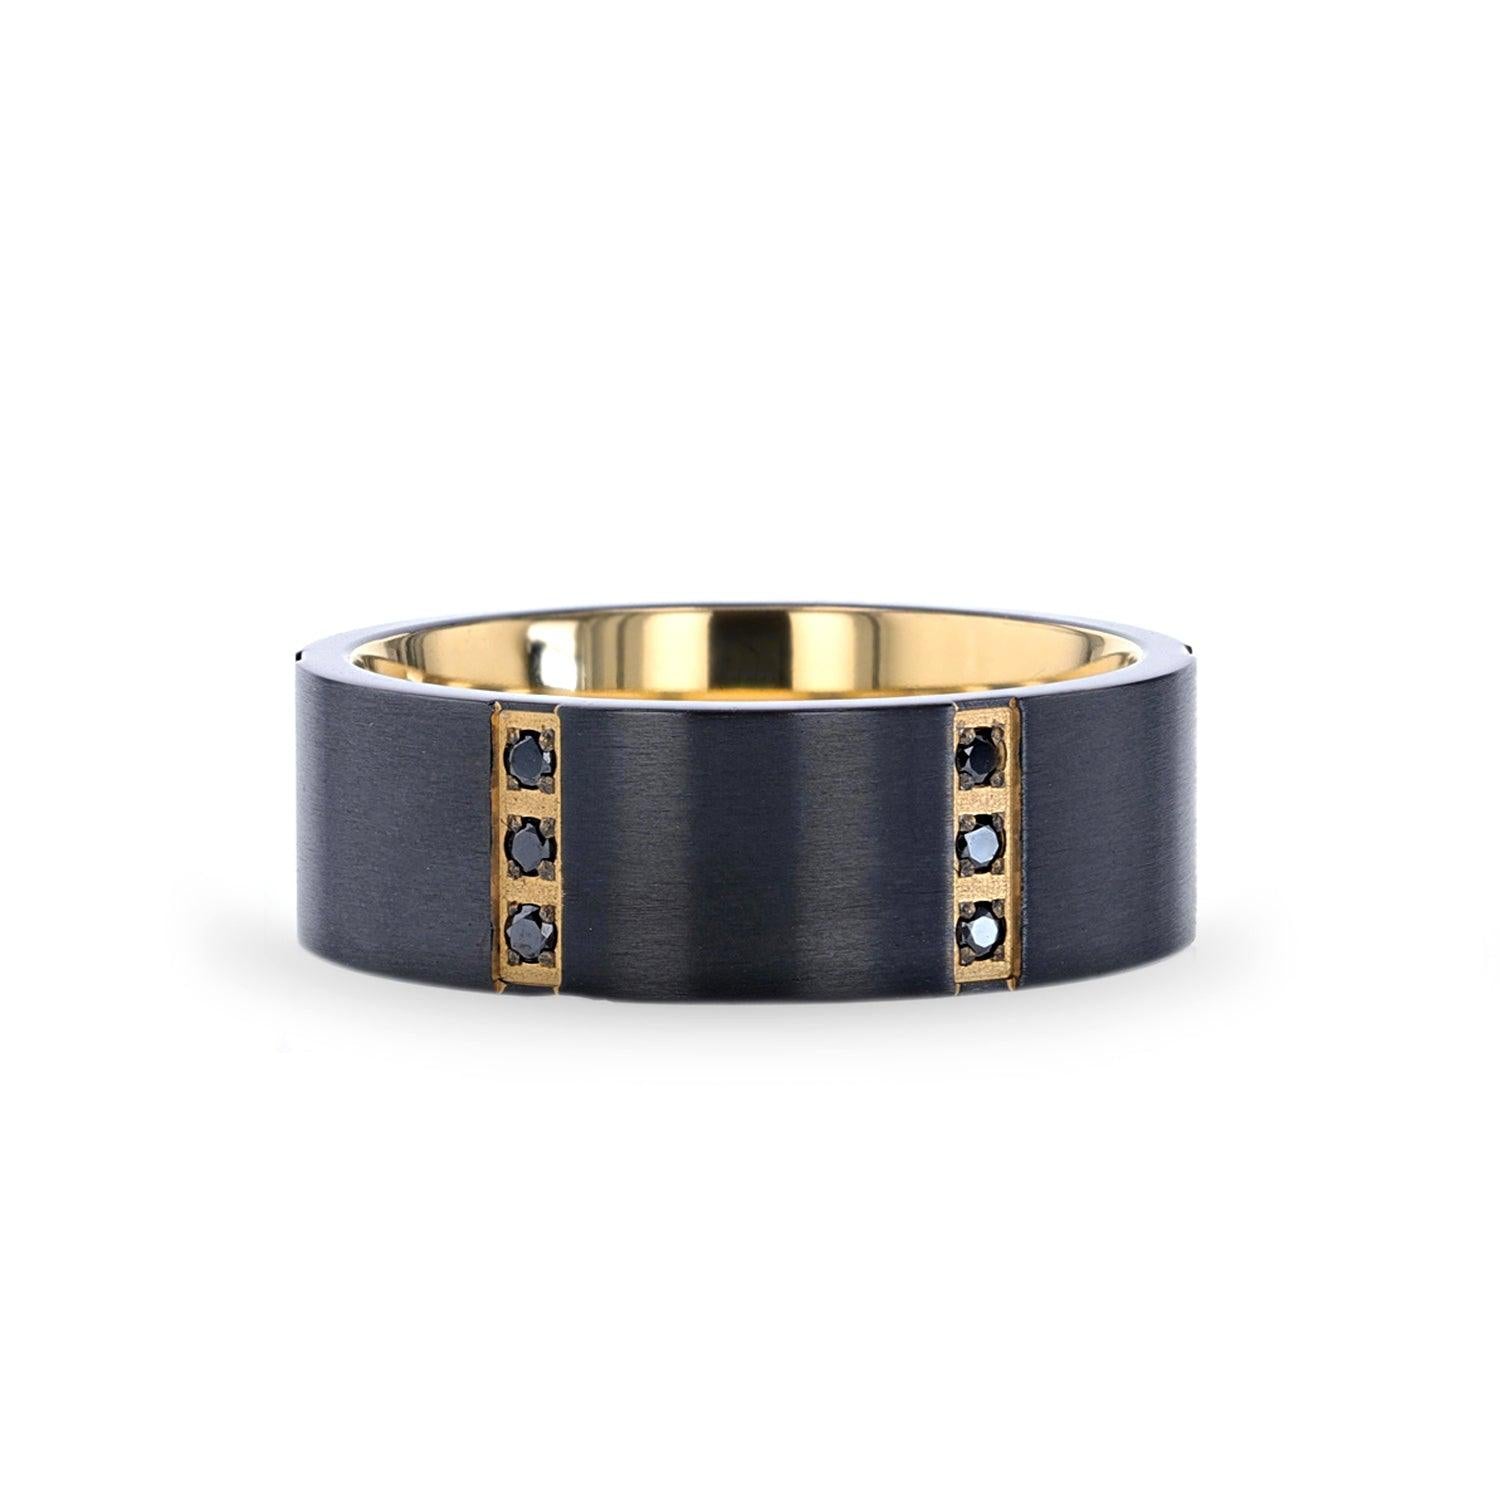 MURAMASA - Black Titanium, Stainless Steel, Gold Plate, and Black Diamond Ring - The Rutile Ltd